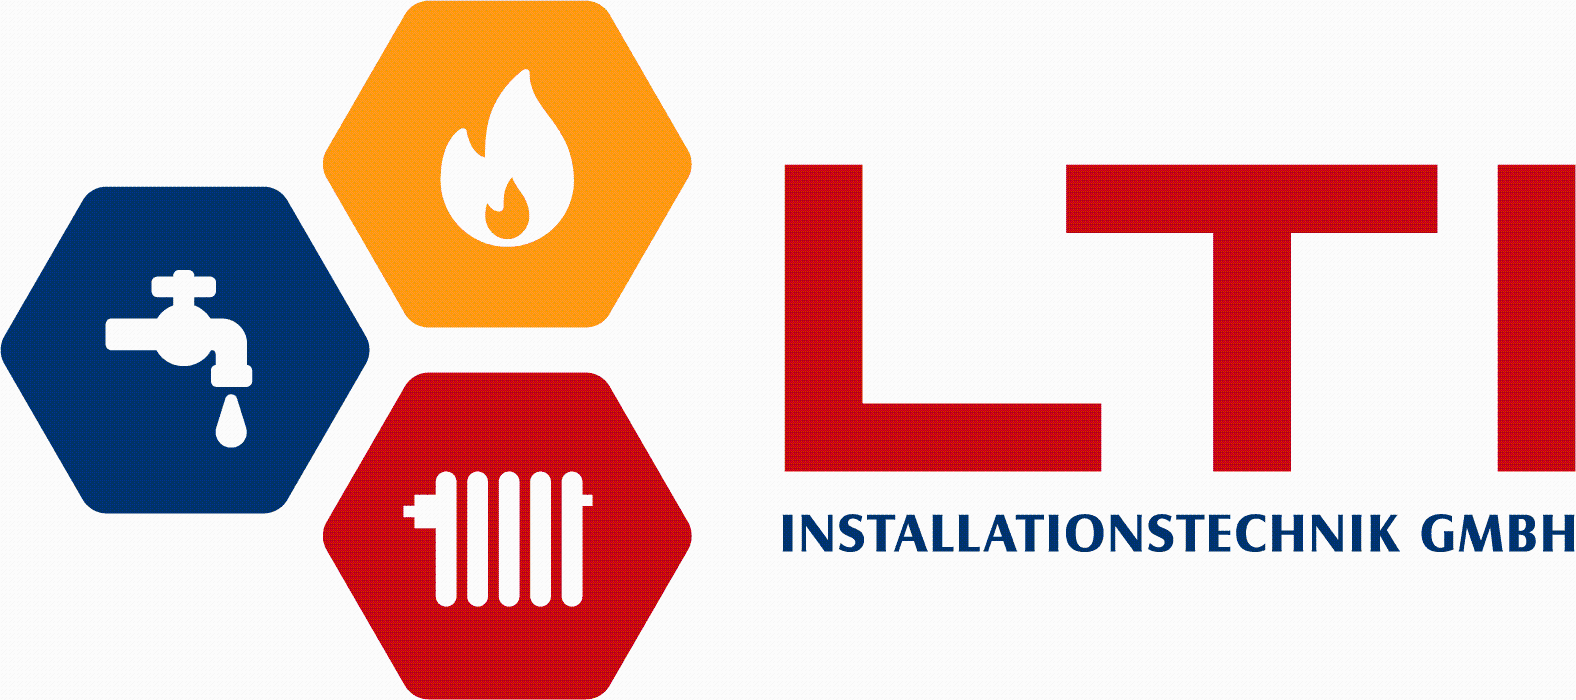 Logo LTI Installationstechnik GmbH